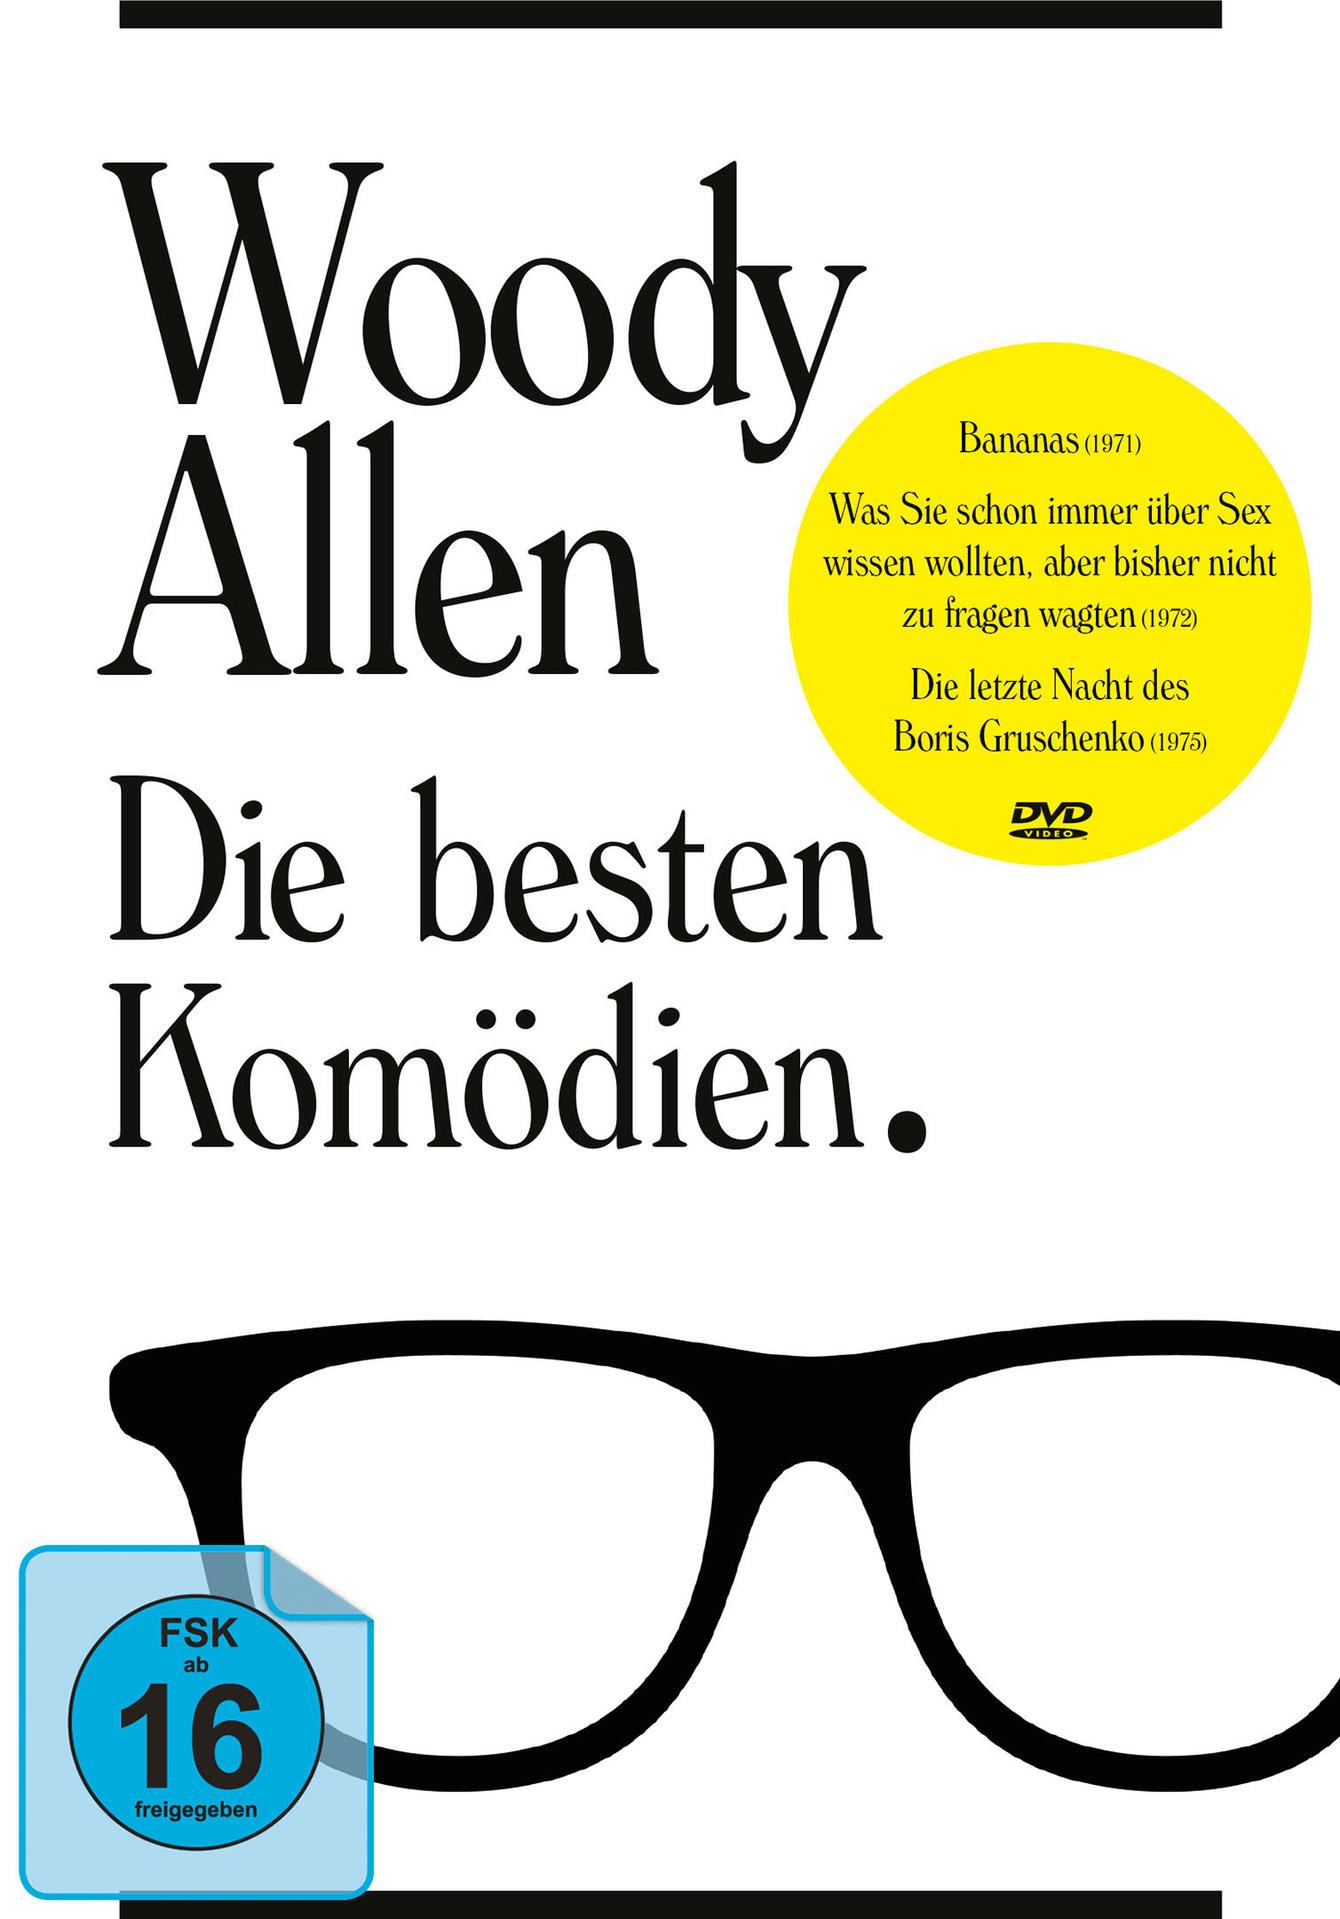 Komödien - Woody besten Die Allen DVD